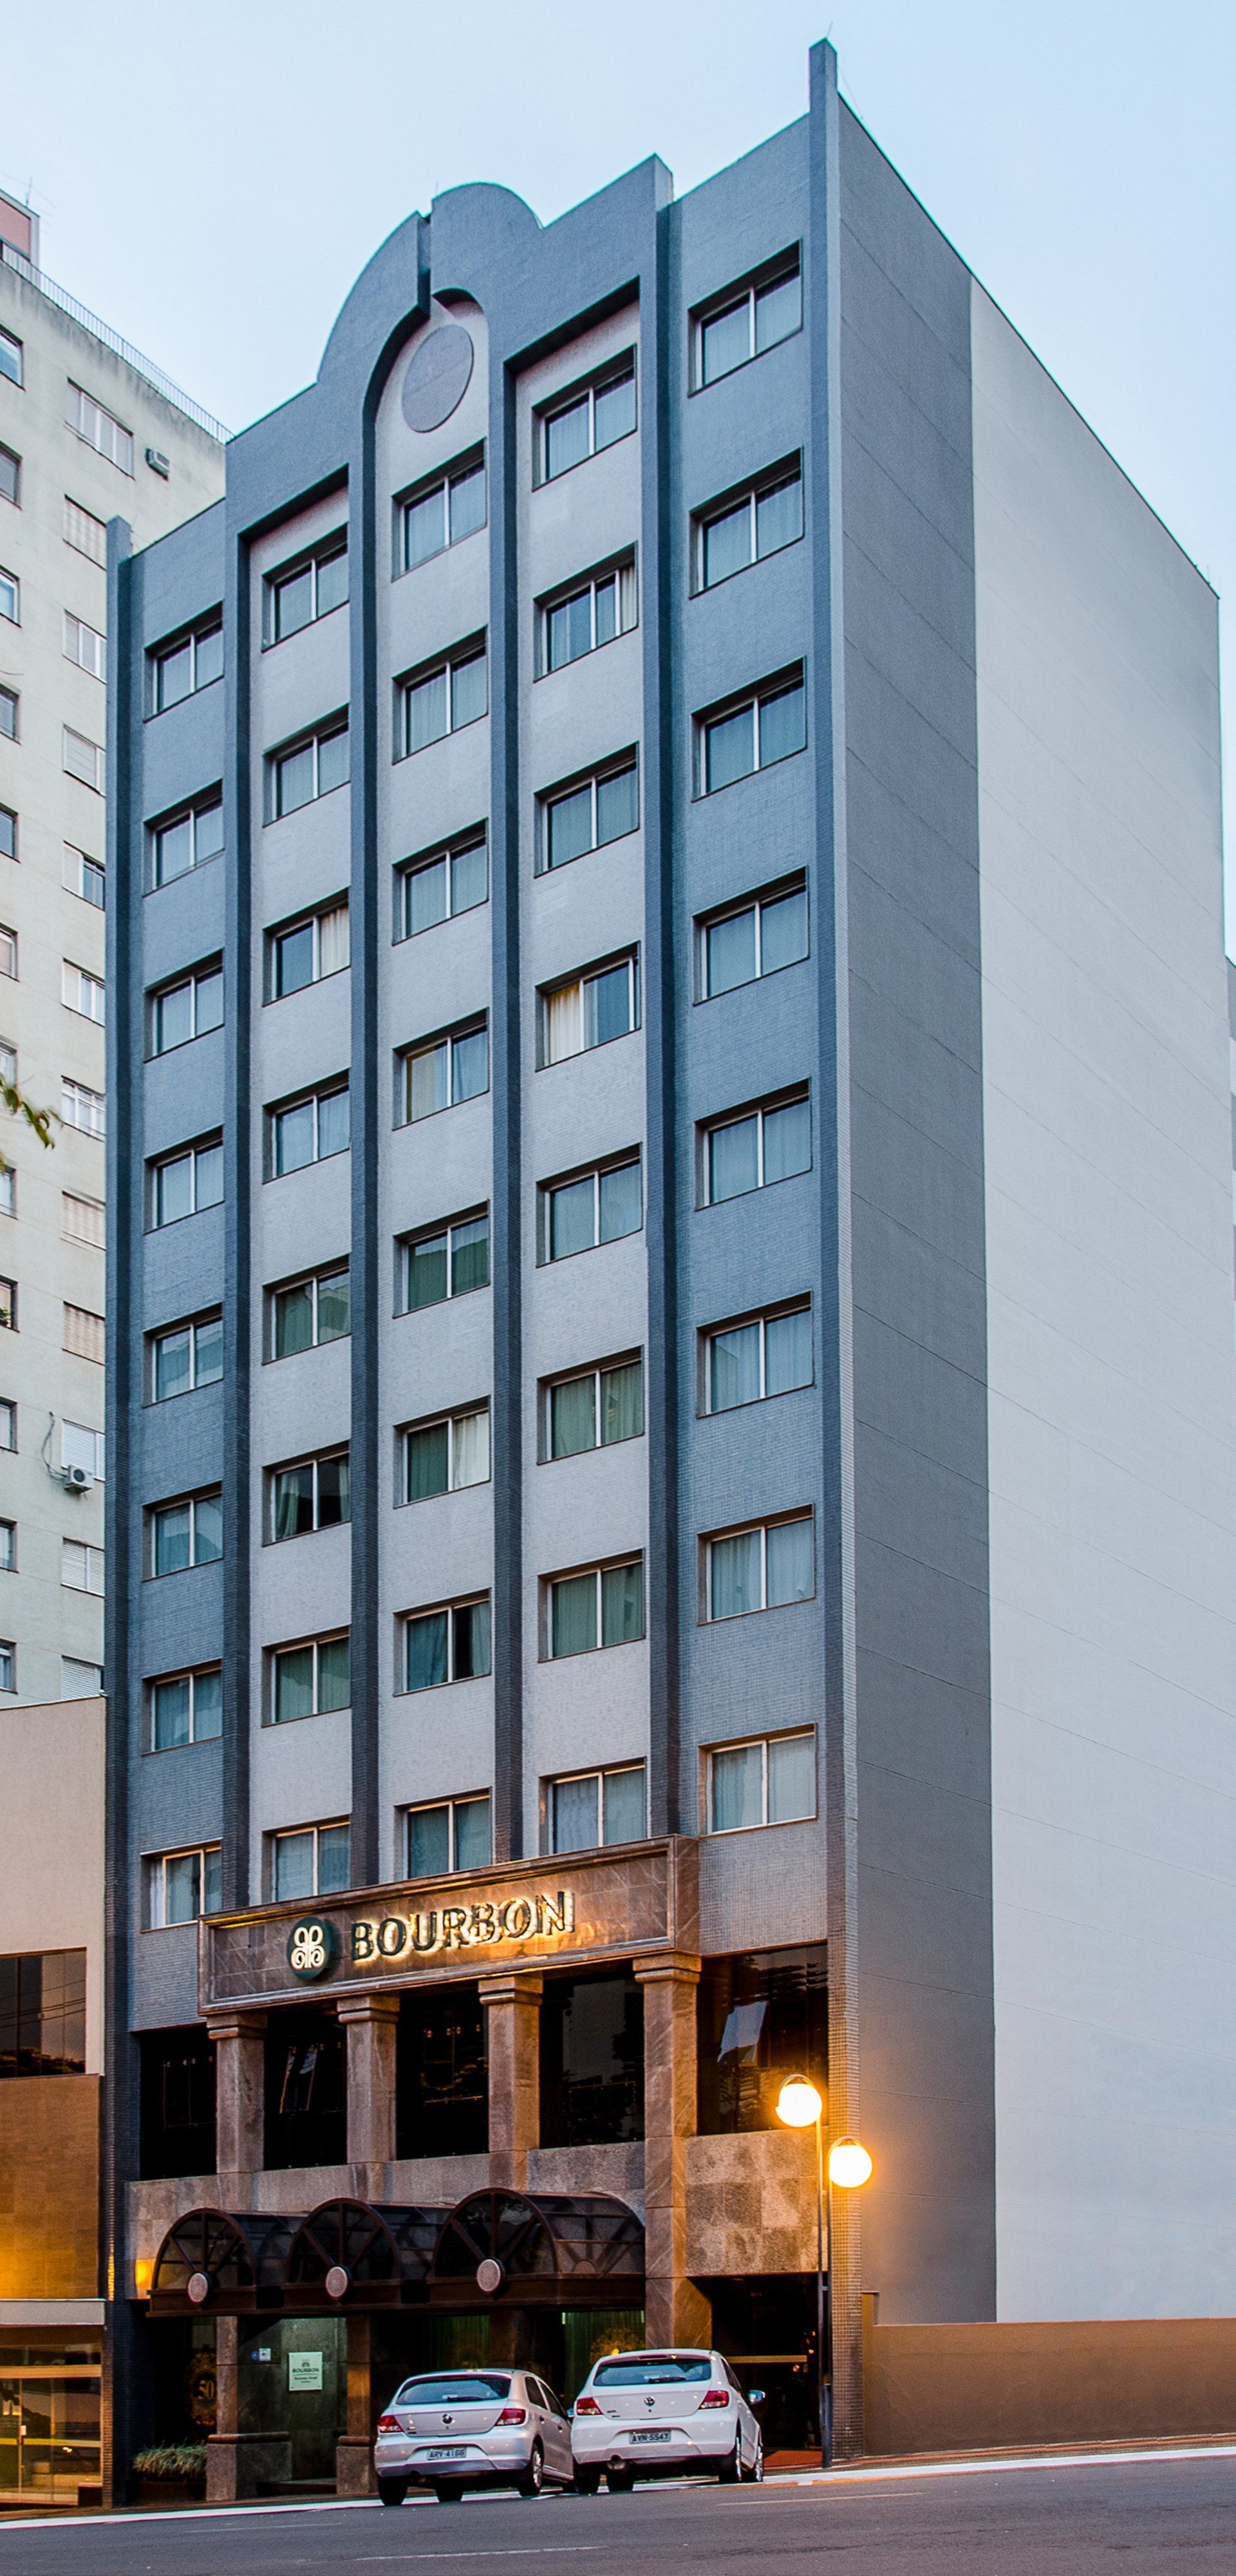 Fachada - Bourbon Londrina Hotel